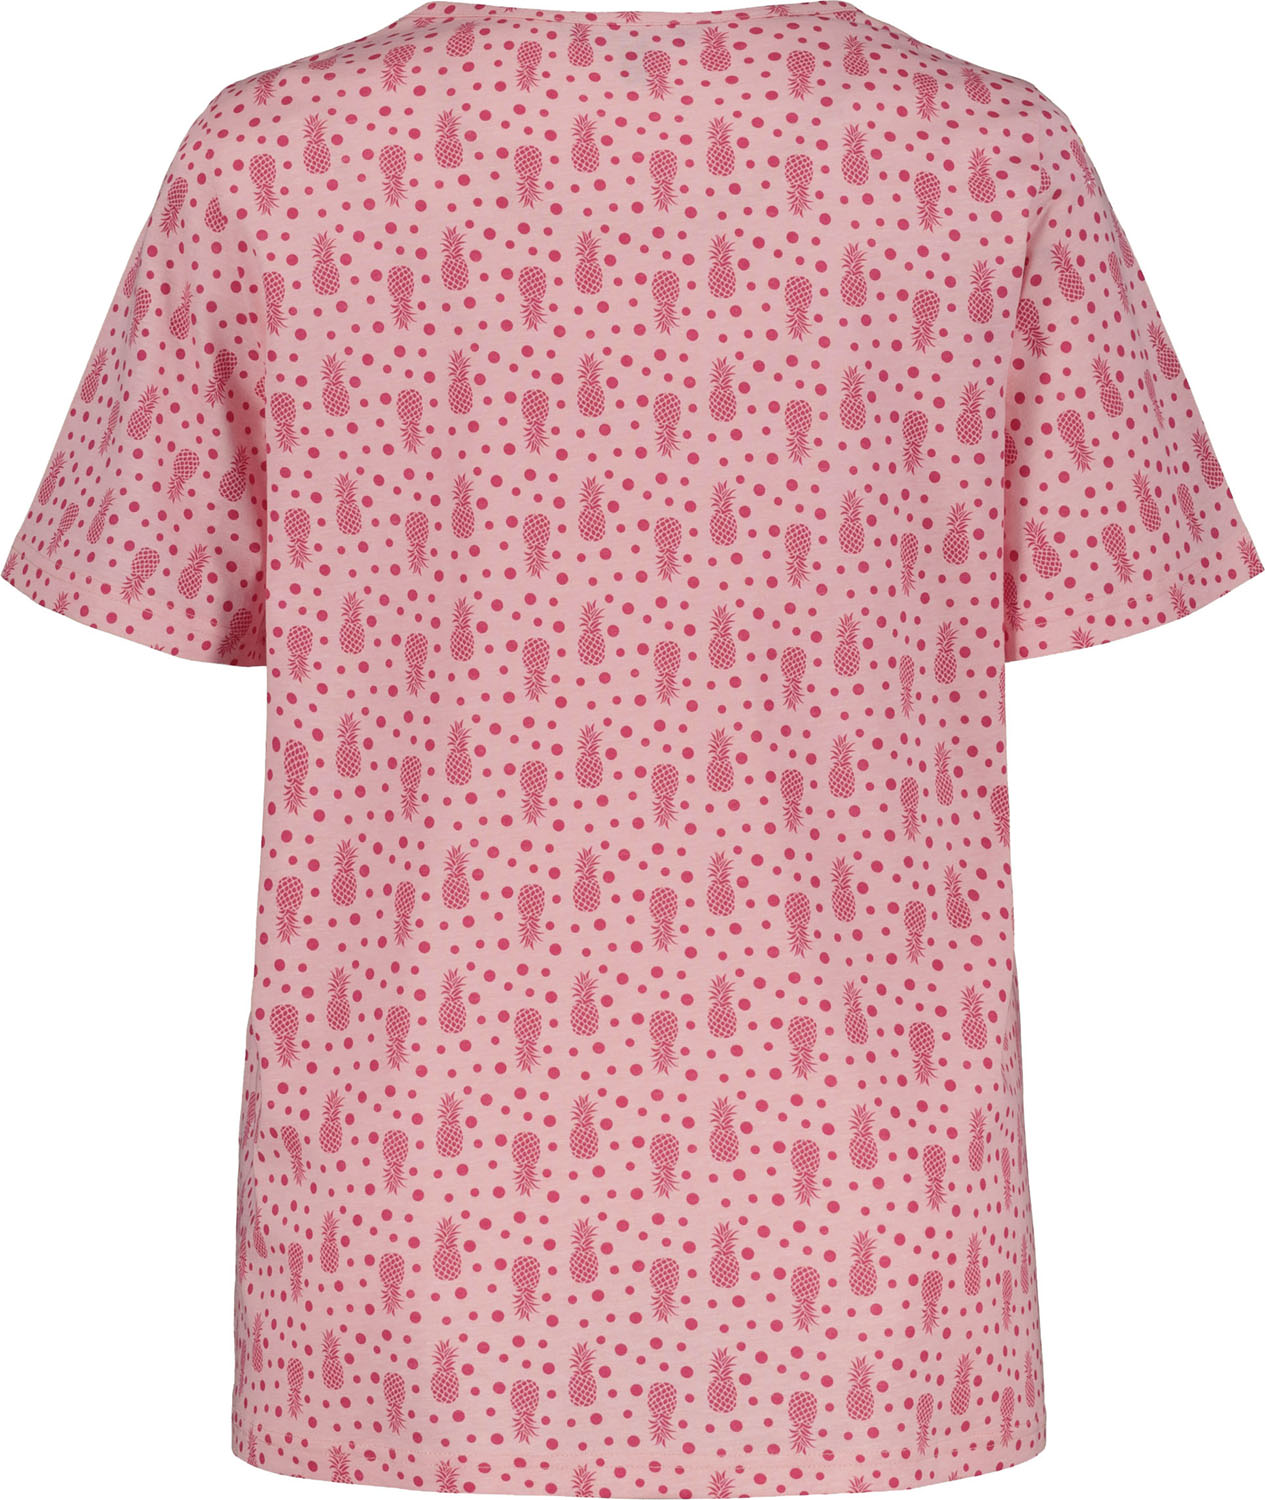 Ulla Popken T-Shirt in Rosa, Pink 